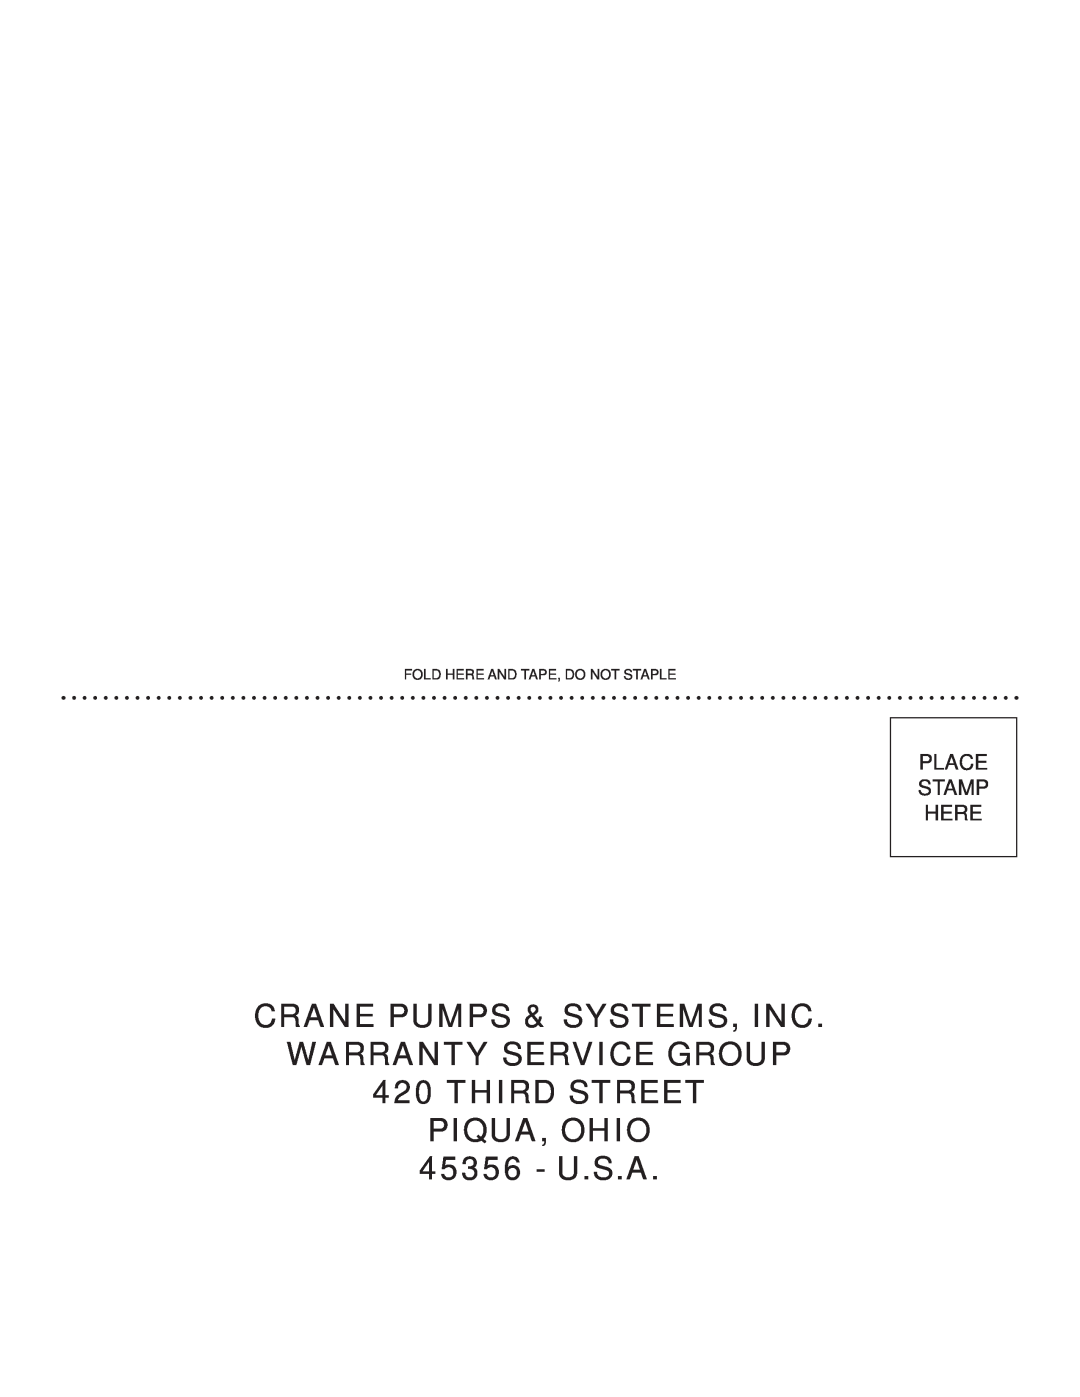 Crane Plumbing 8XSE-HA Crane Pumps & Systems, Inc Warranty Service Group, THIRD STREET PIQUA, OHIO 45356 - U.S.A 